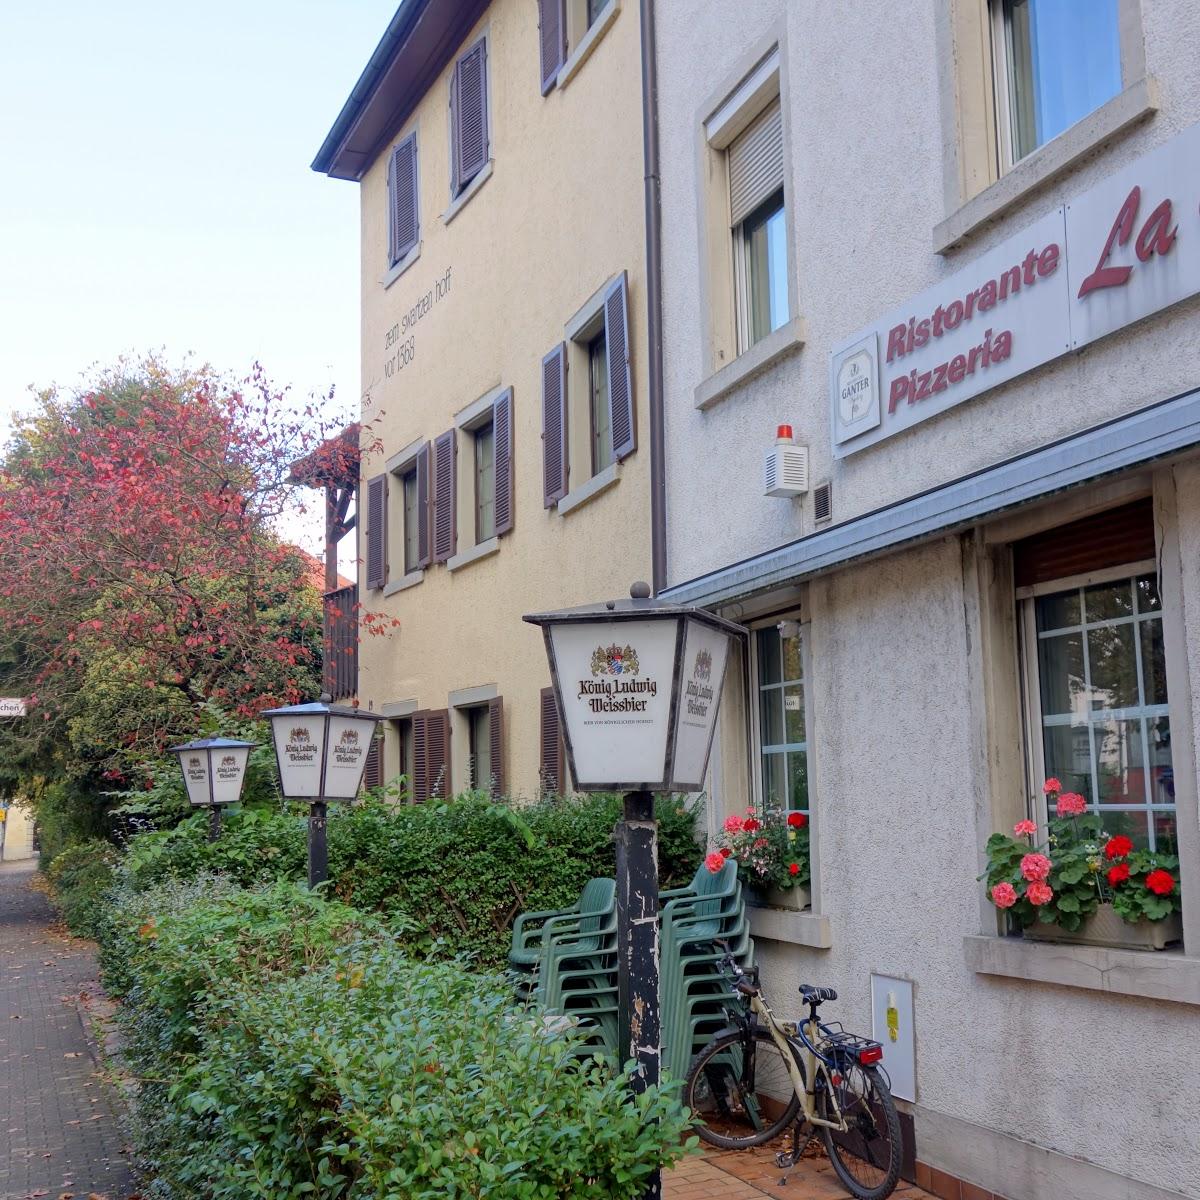 Restaurant "Trube-Stube" in  Konstanz